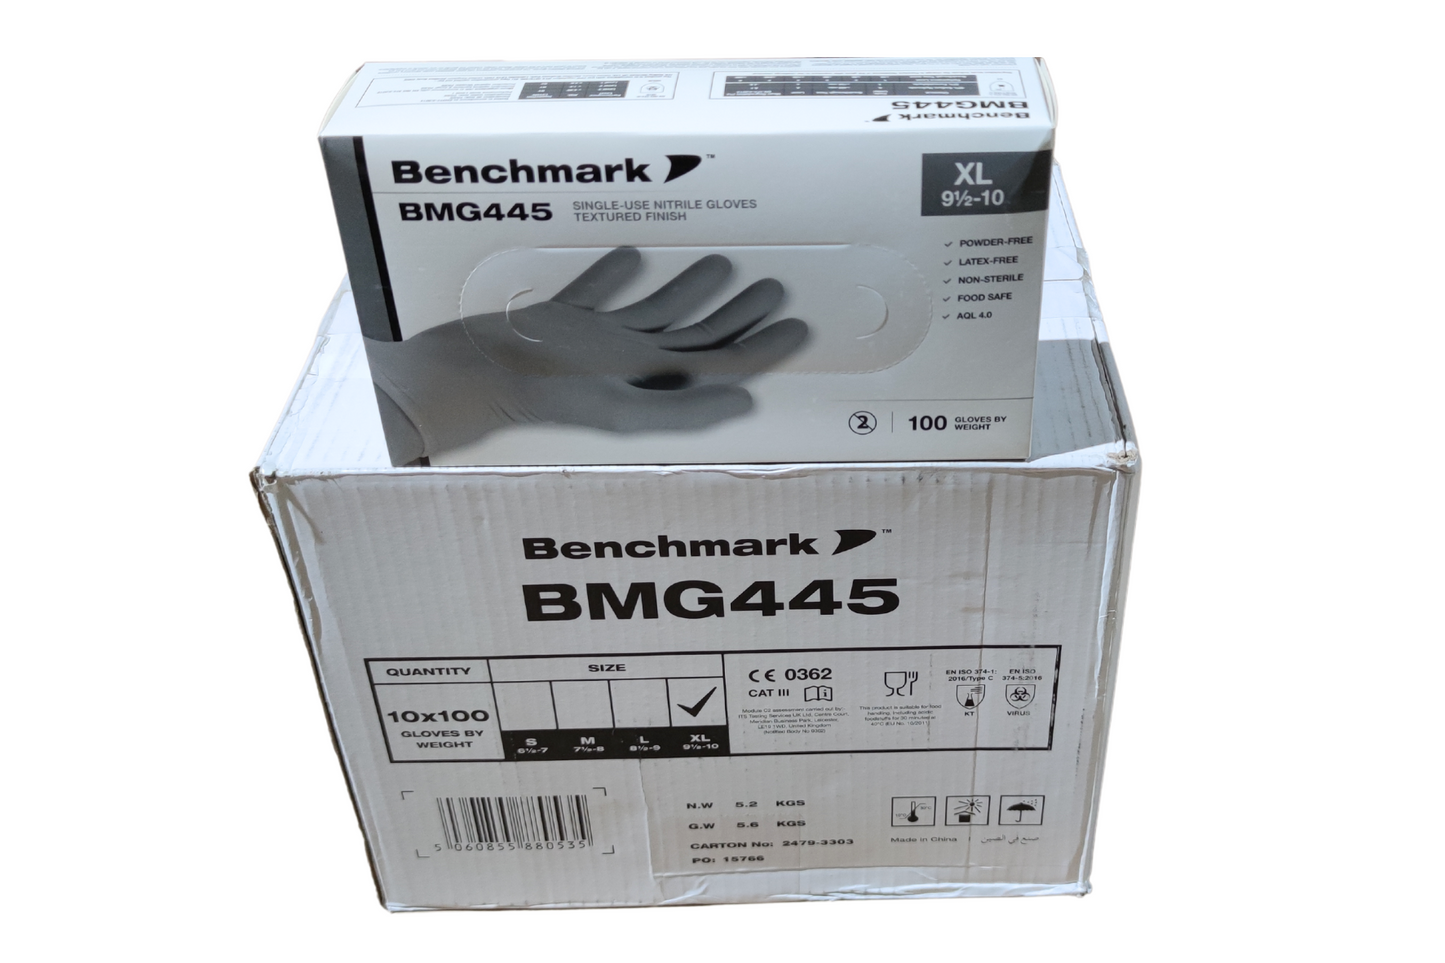 BMG445 Benchmark Nitrile Gloves - XL (10x100) (1280XL) cat III